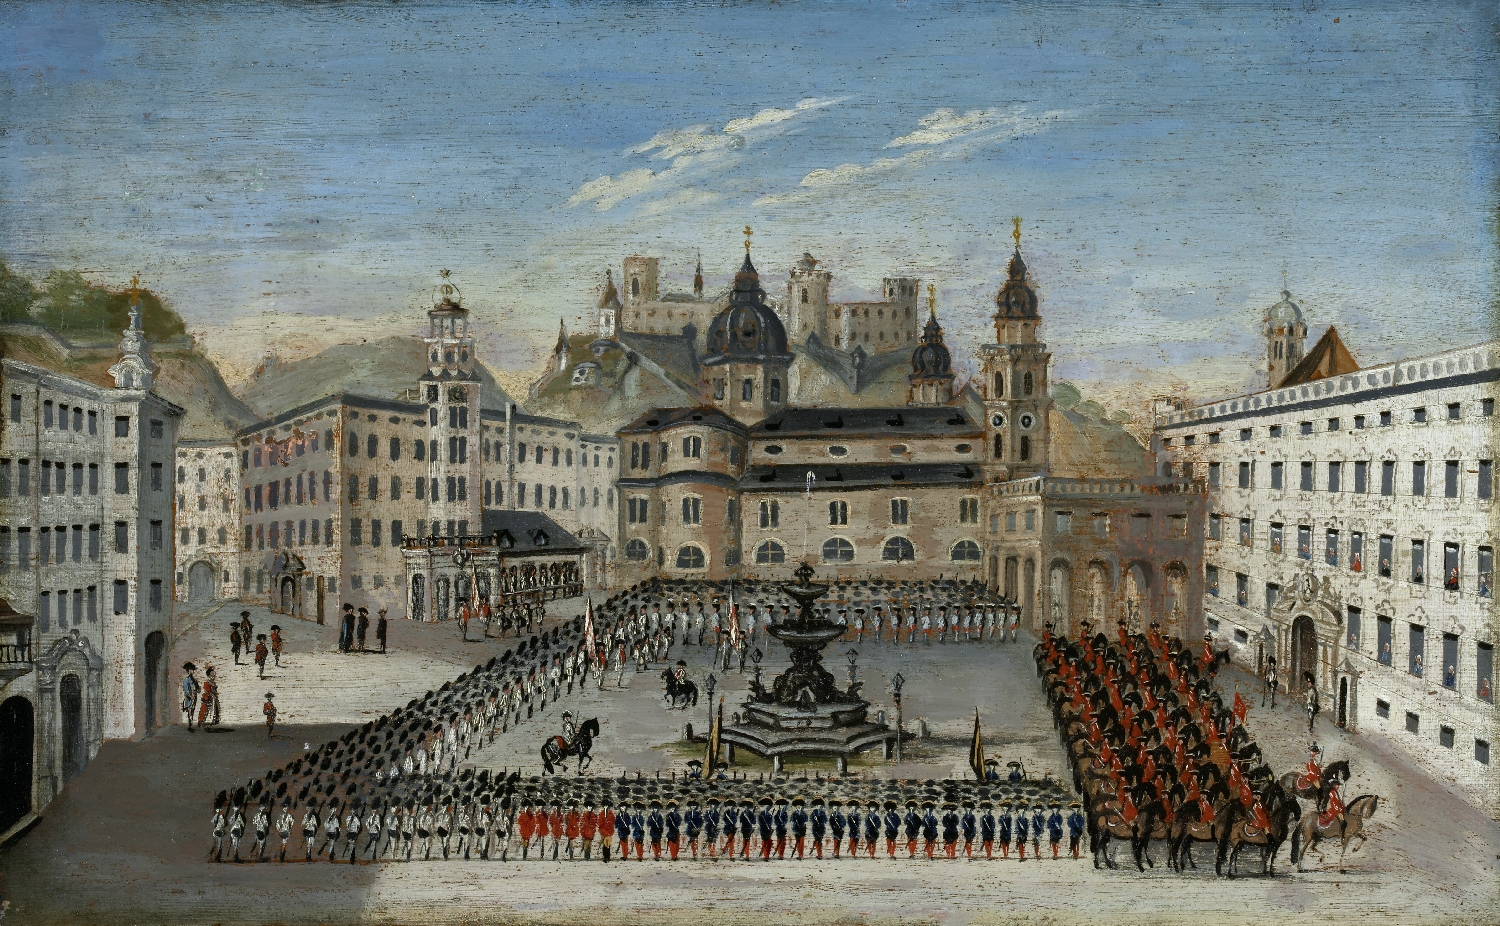 Parade on Residenzplatz, Carl Schneeweis, 1776, oil on wood, inv. no. 603-49